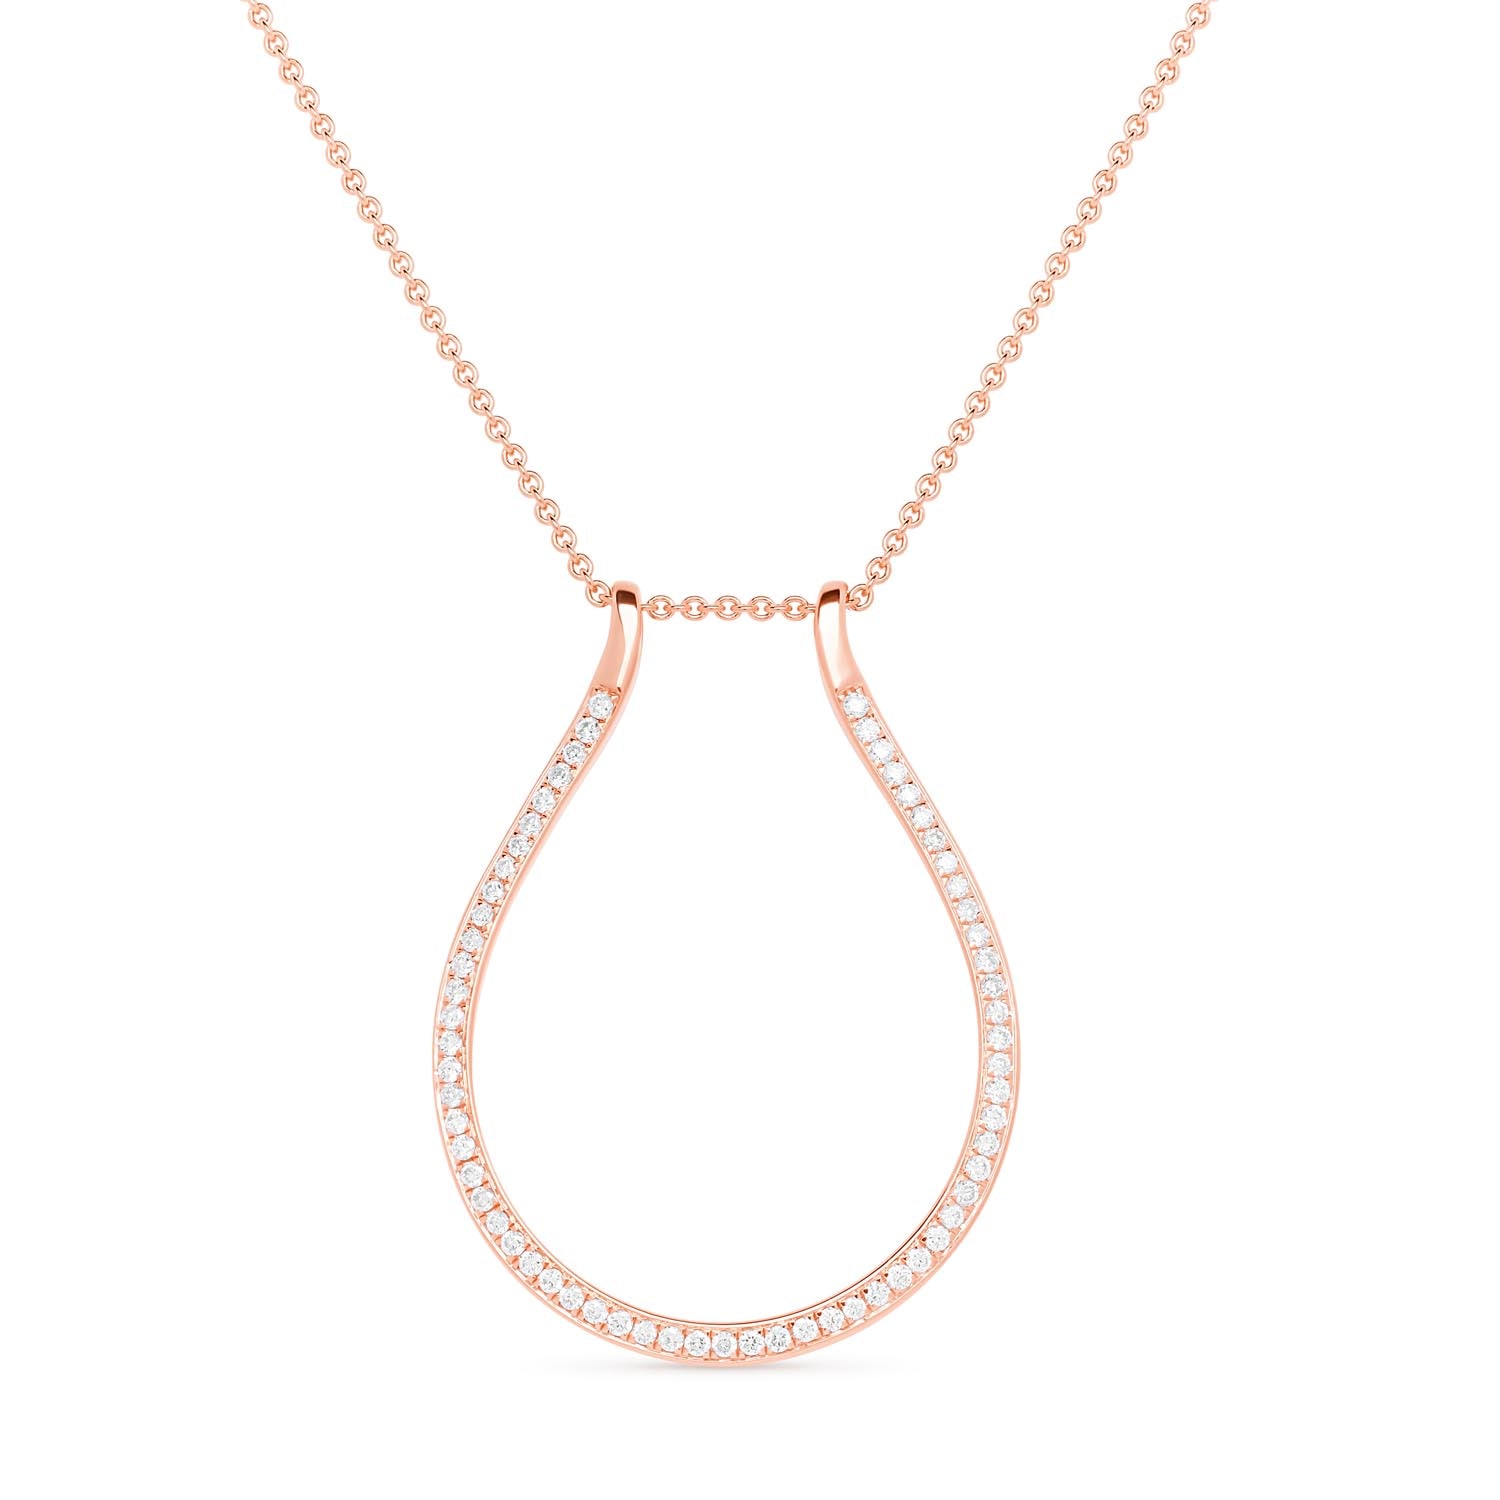 Ring Holder Diamond Necklace - Rose Gold